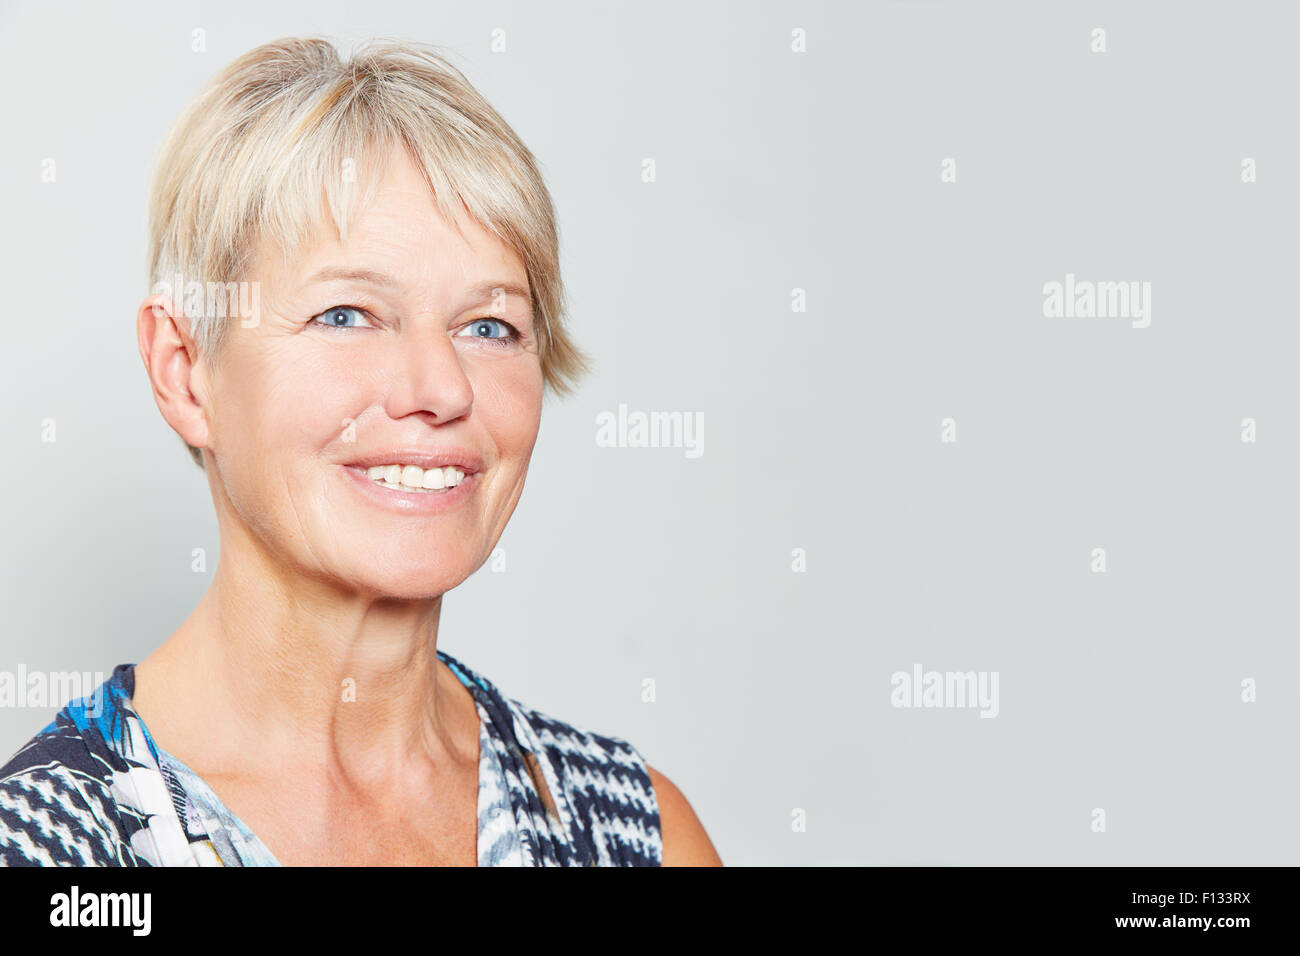 Smiling happy senior woman with grey hair Stock Photo - Alamy